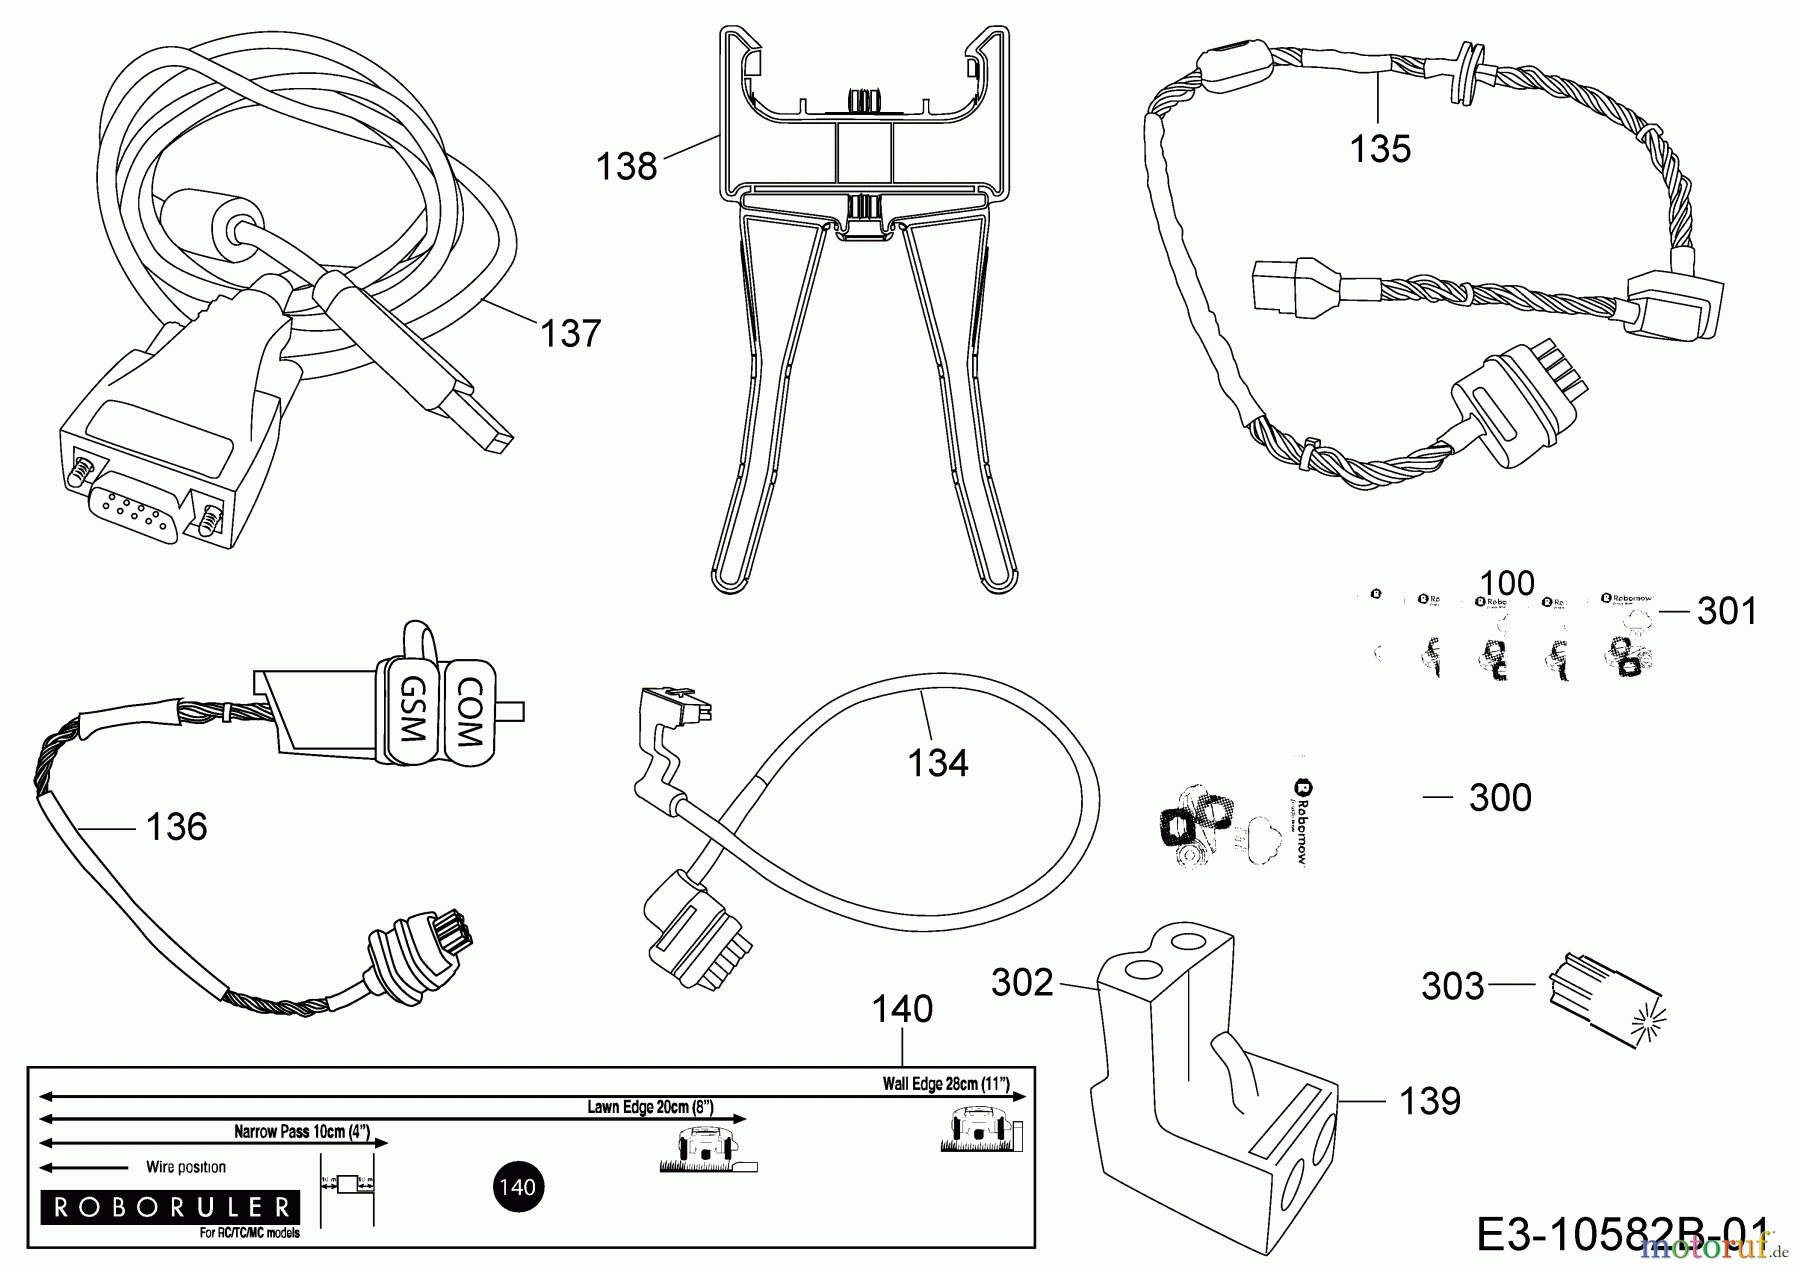  Robomow Mähroboter RC312 PRO S PRD7012G  (2017) Kabel, Kabelanschluß, Regensensor, Werkzeug